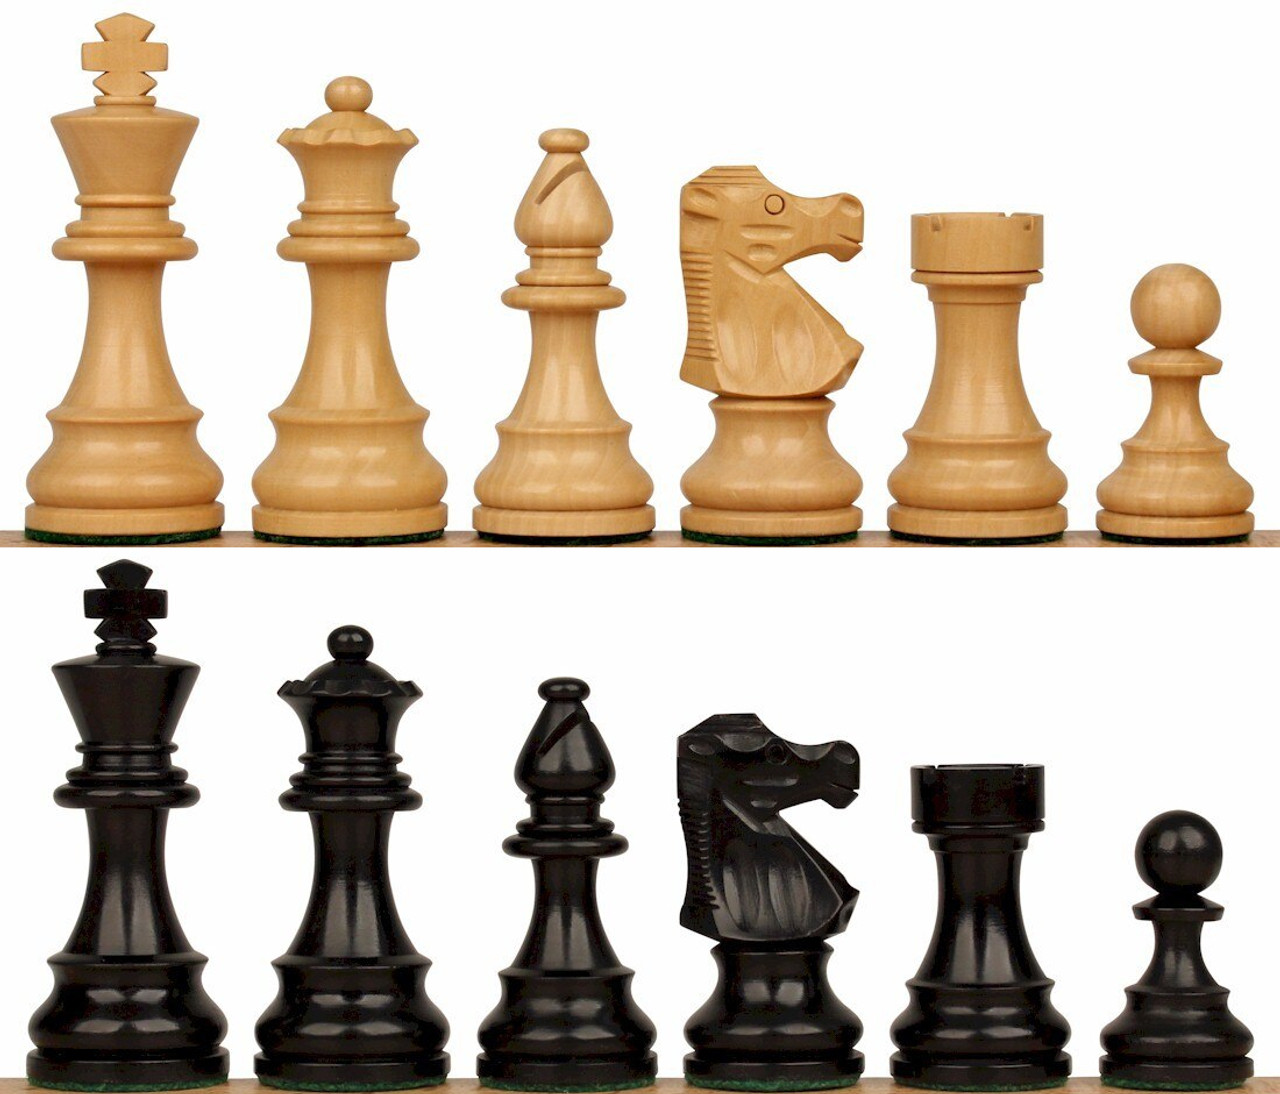 The French Lardy Series Chess Set - 3.75 King